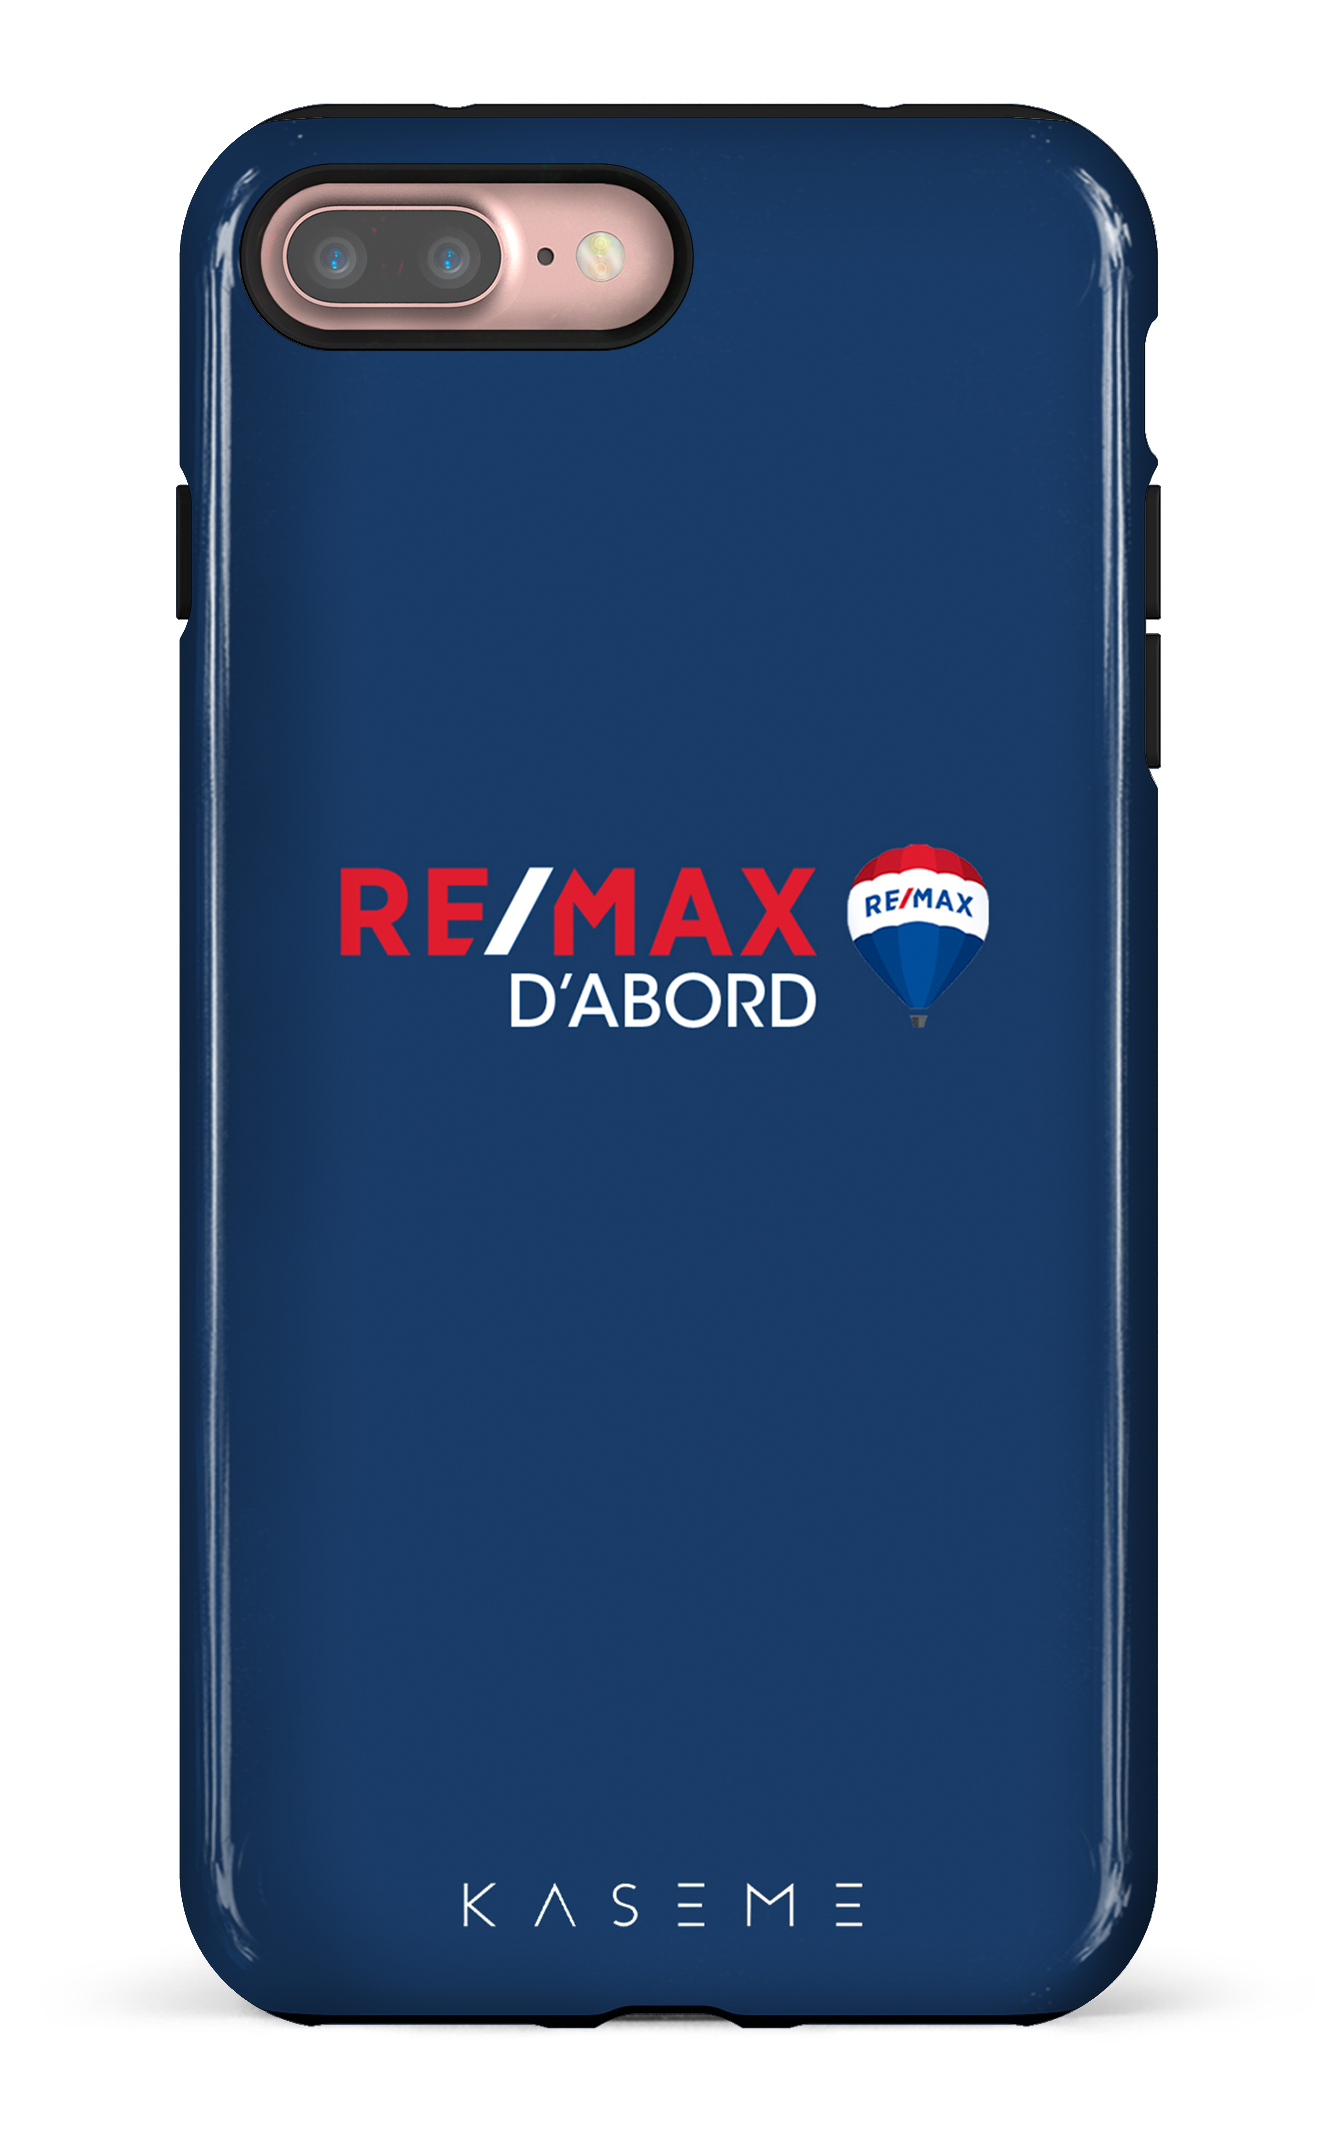 Remax D'abord Bleu - iPhone 7 Plus